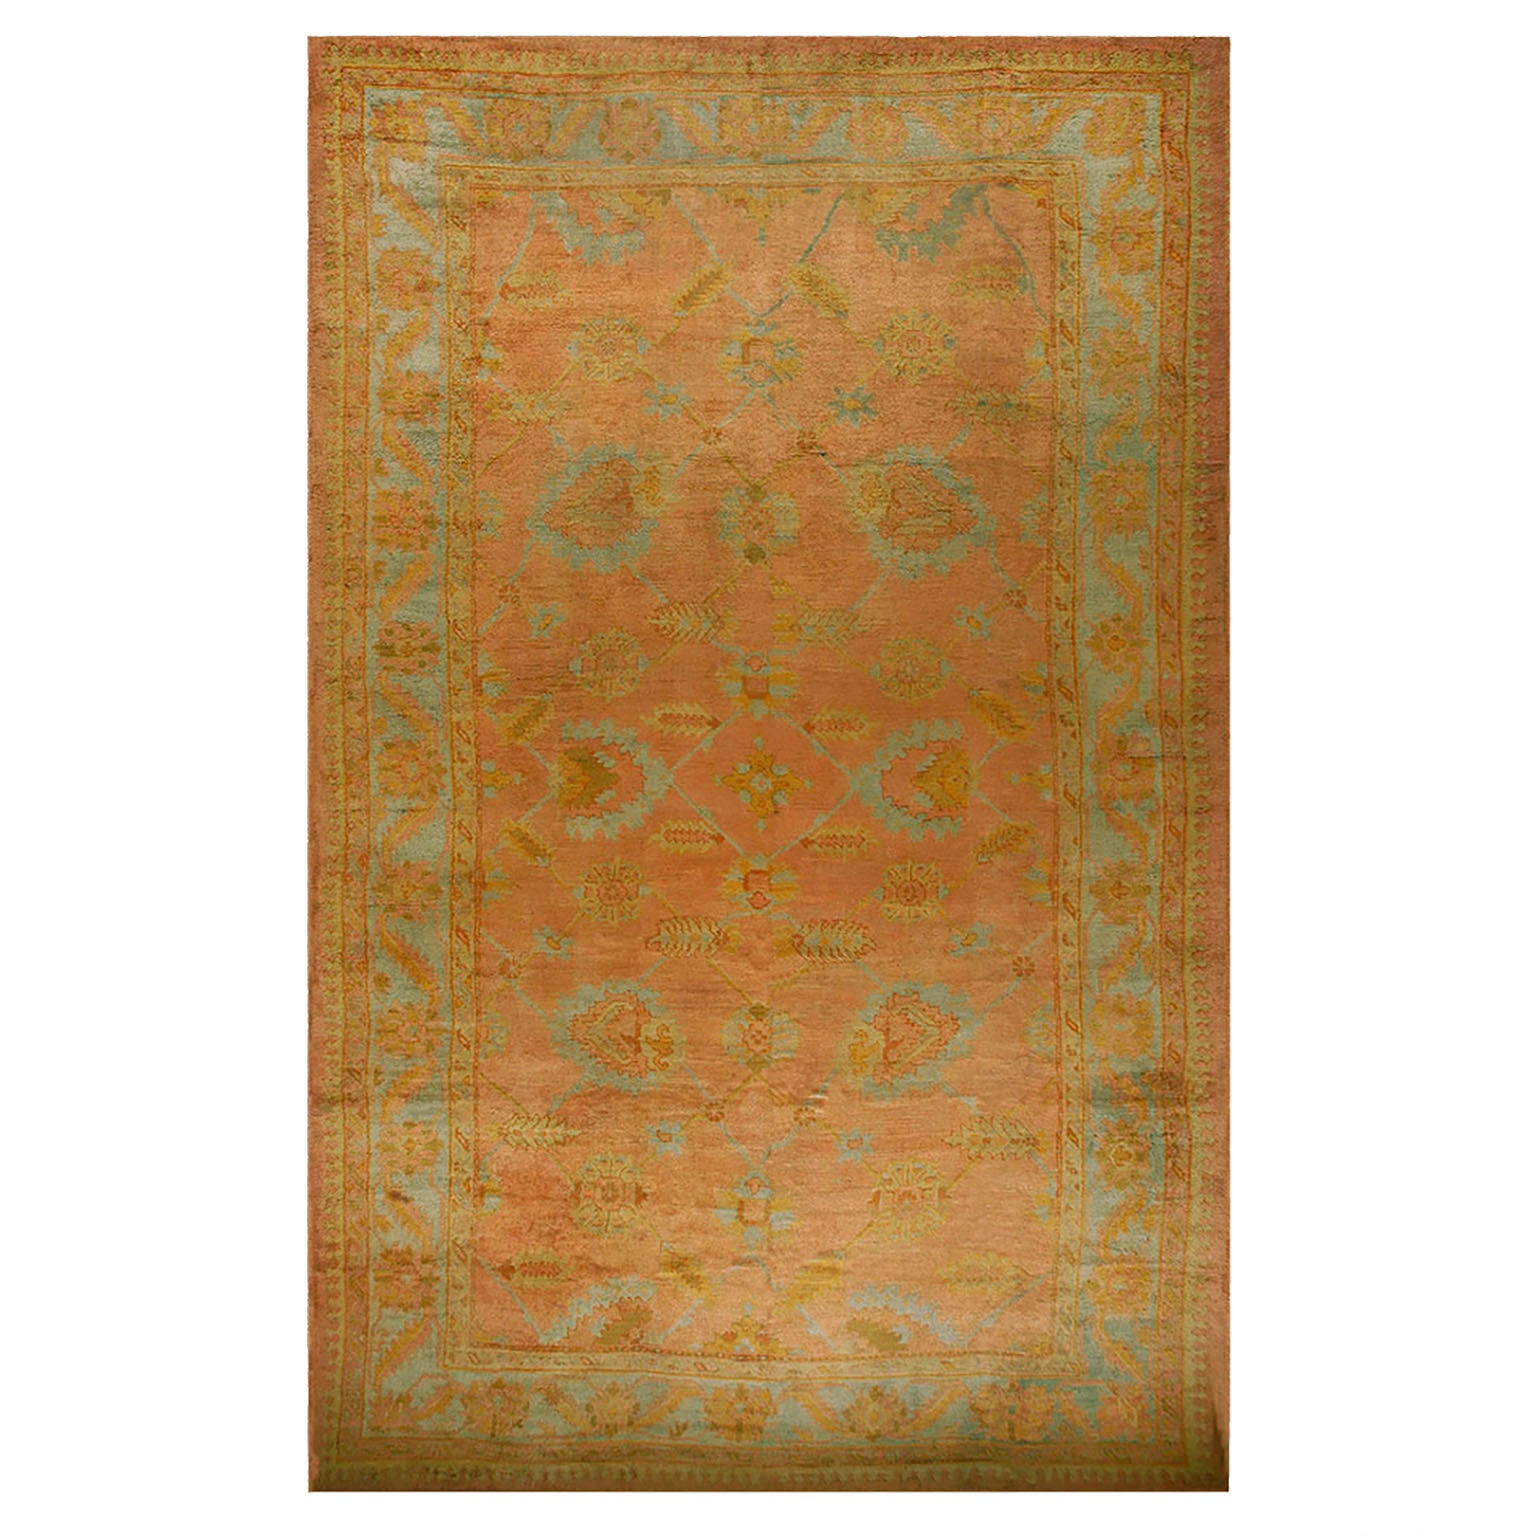 19th Century Turkish Oushak Carpet ( 11'2" x 18''6" - 340 x 564 )